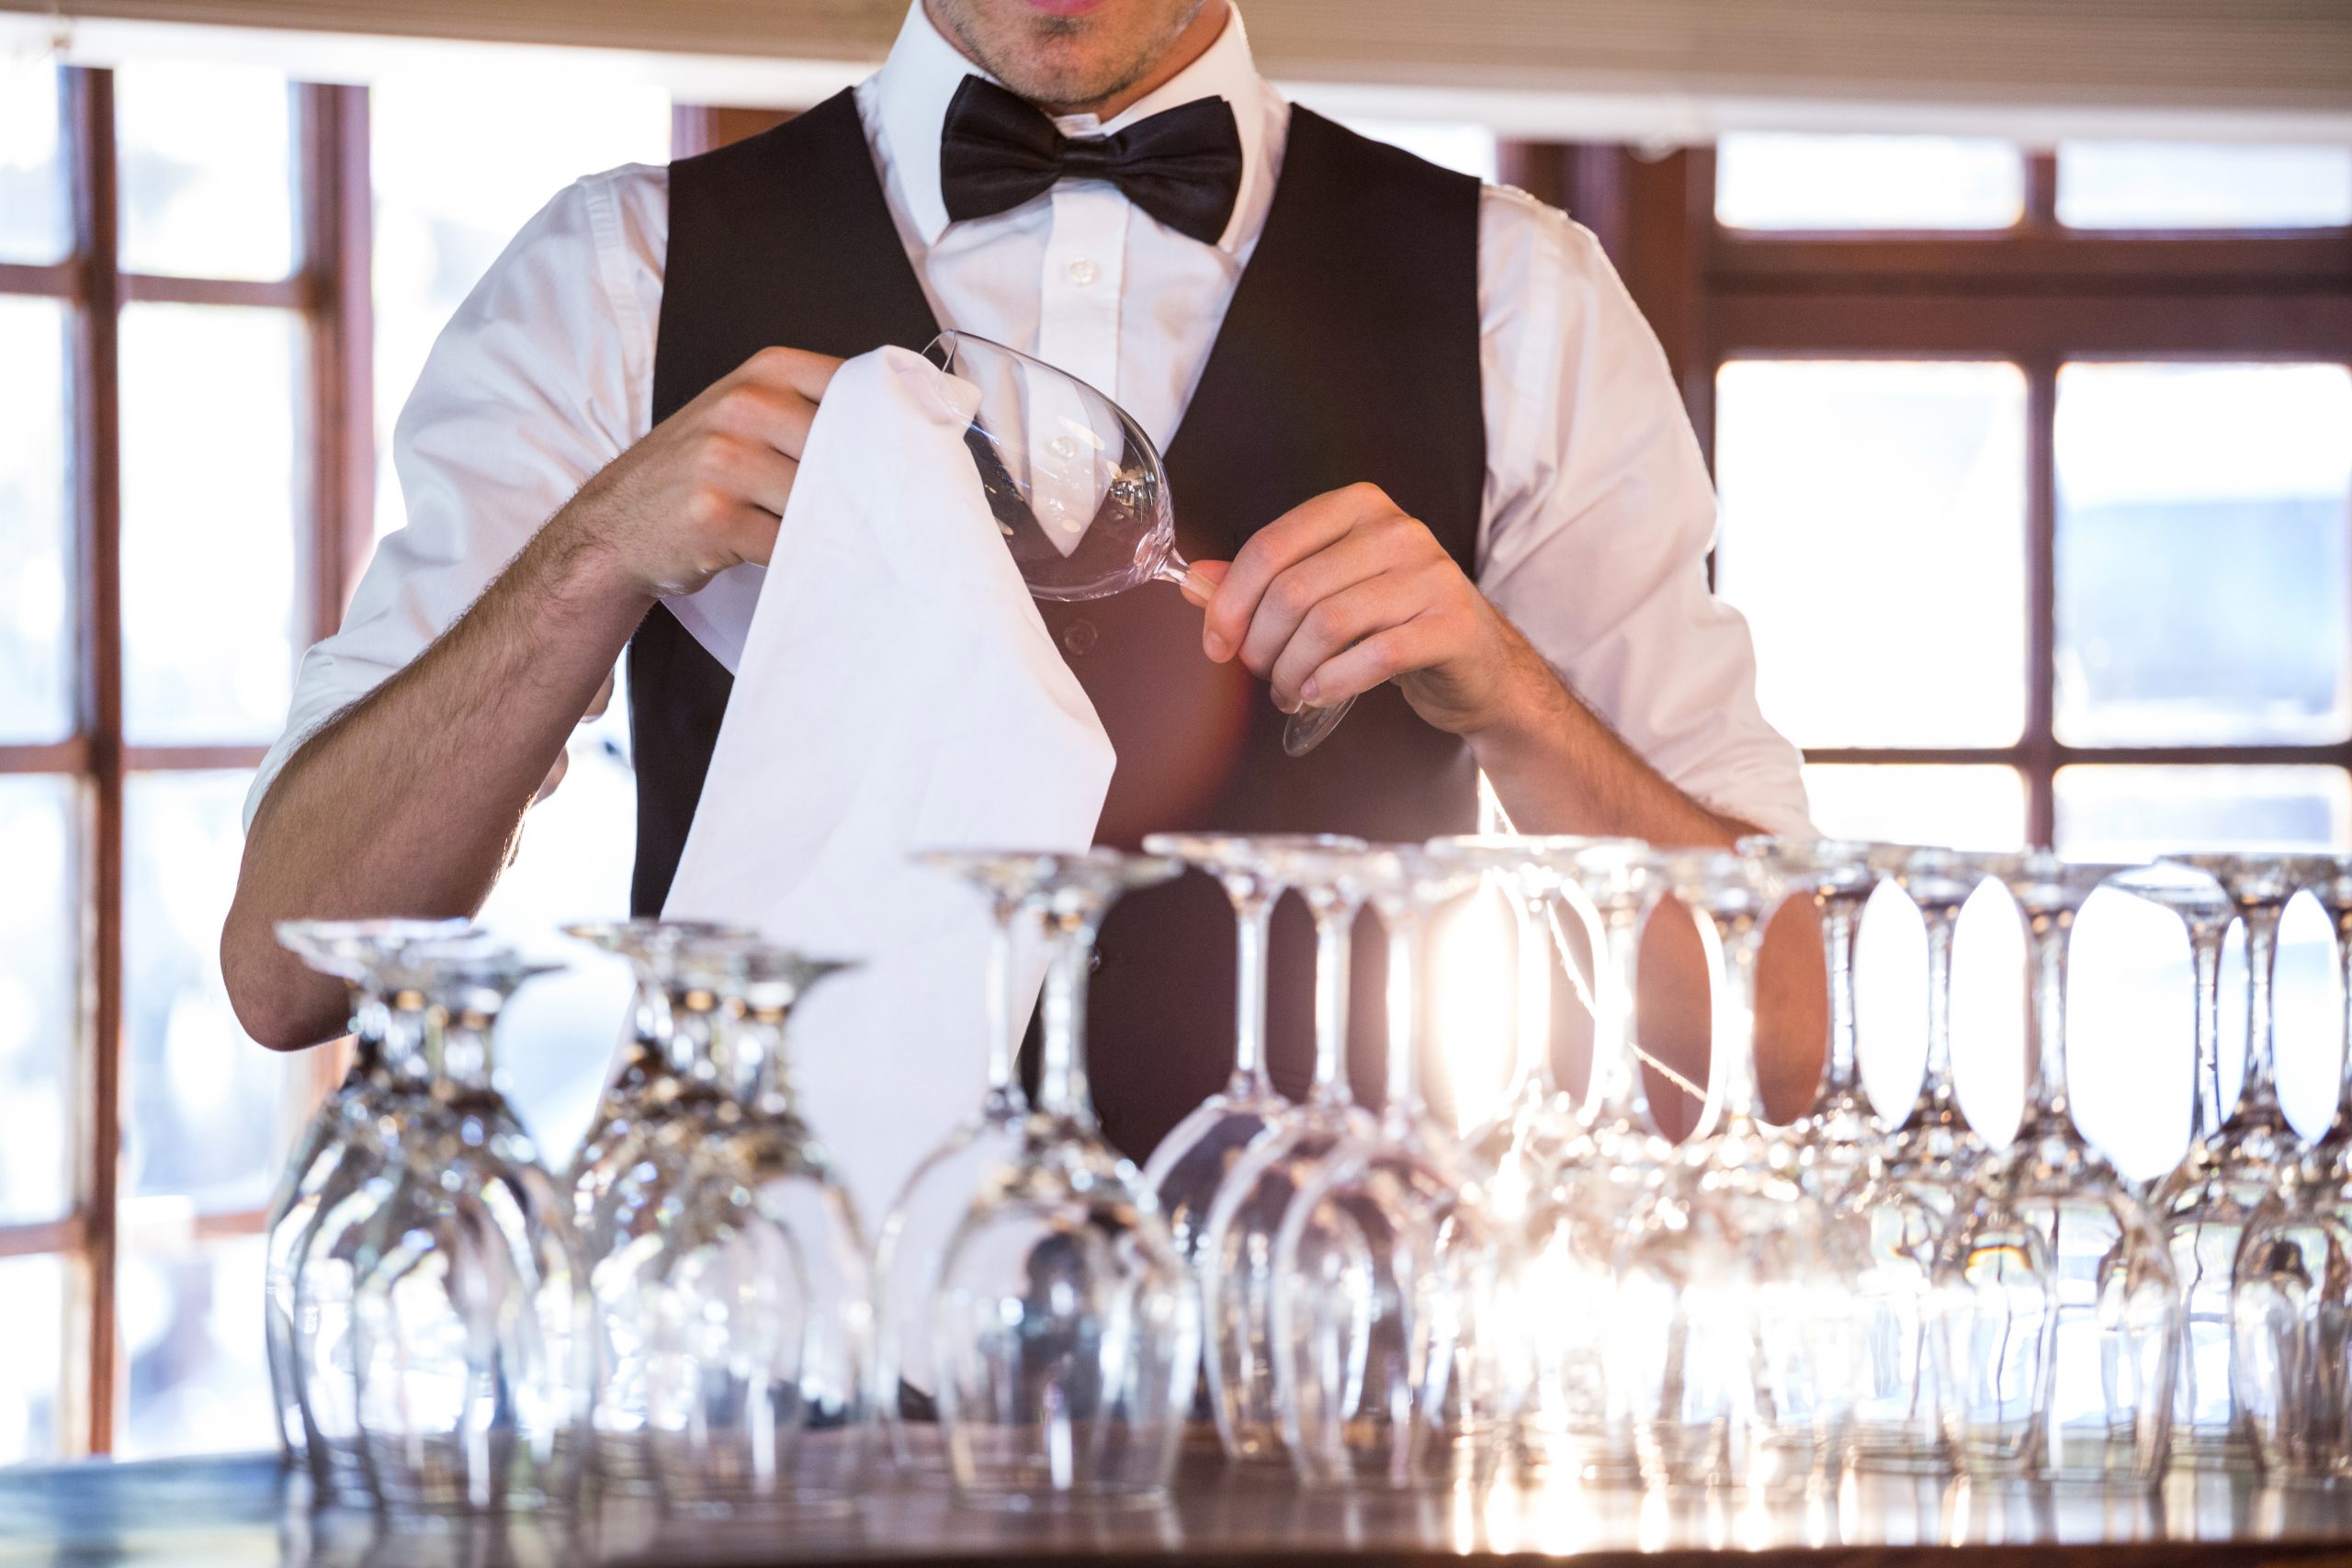 Hospitality Bar Tender Cleaning Wine Glasses